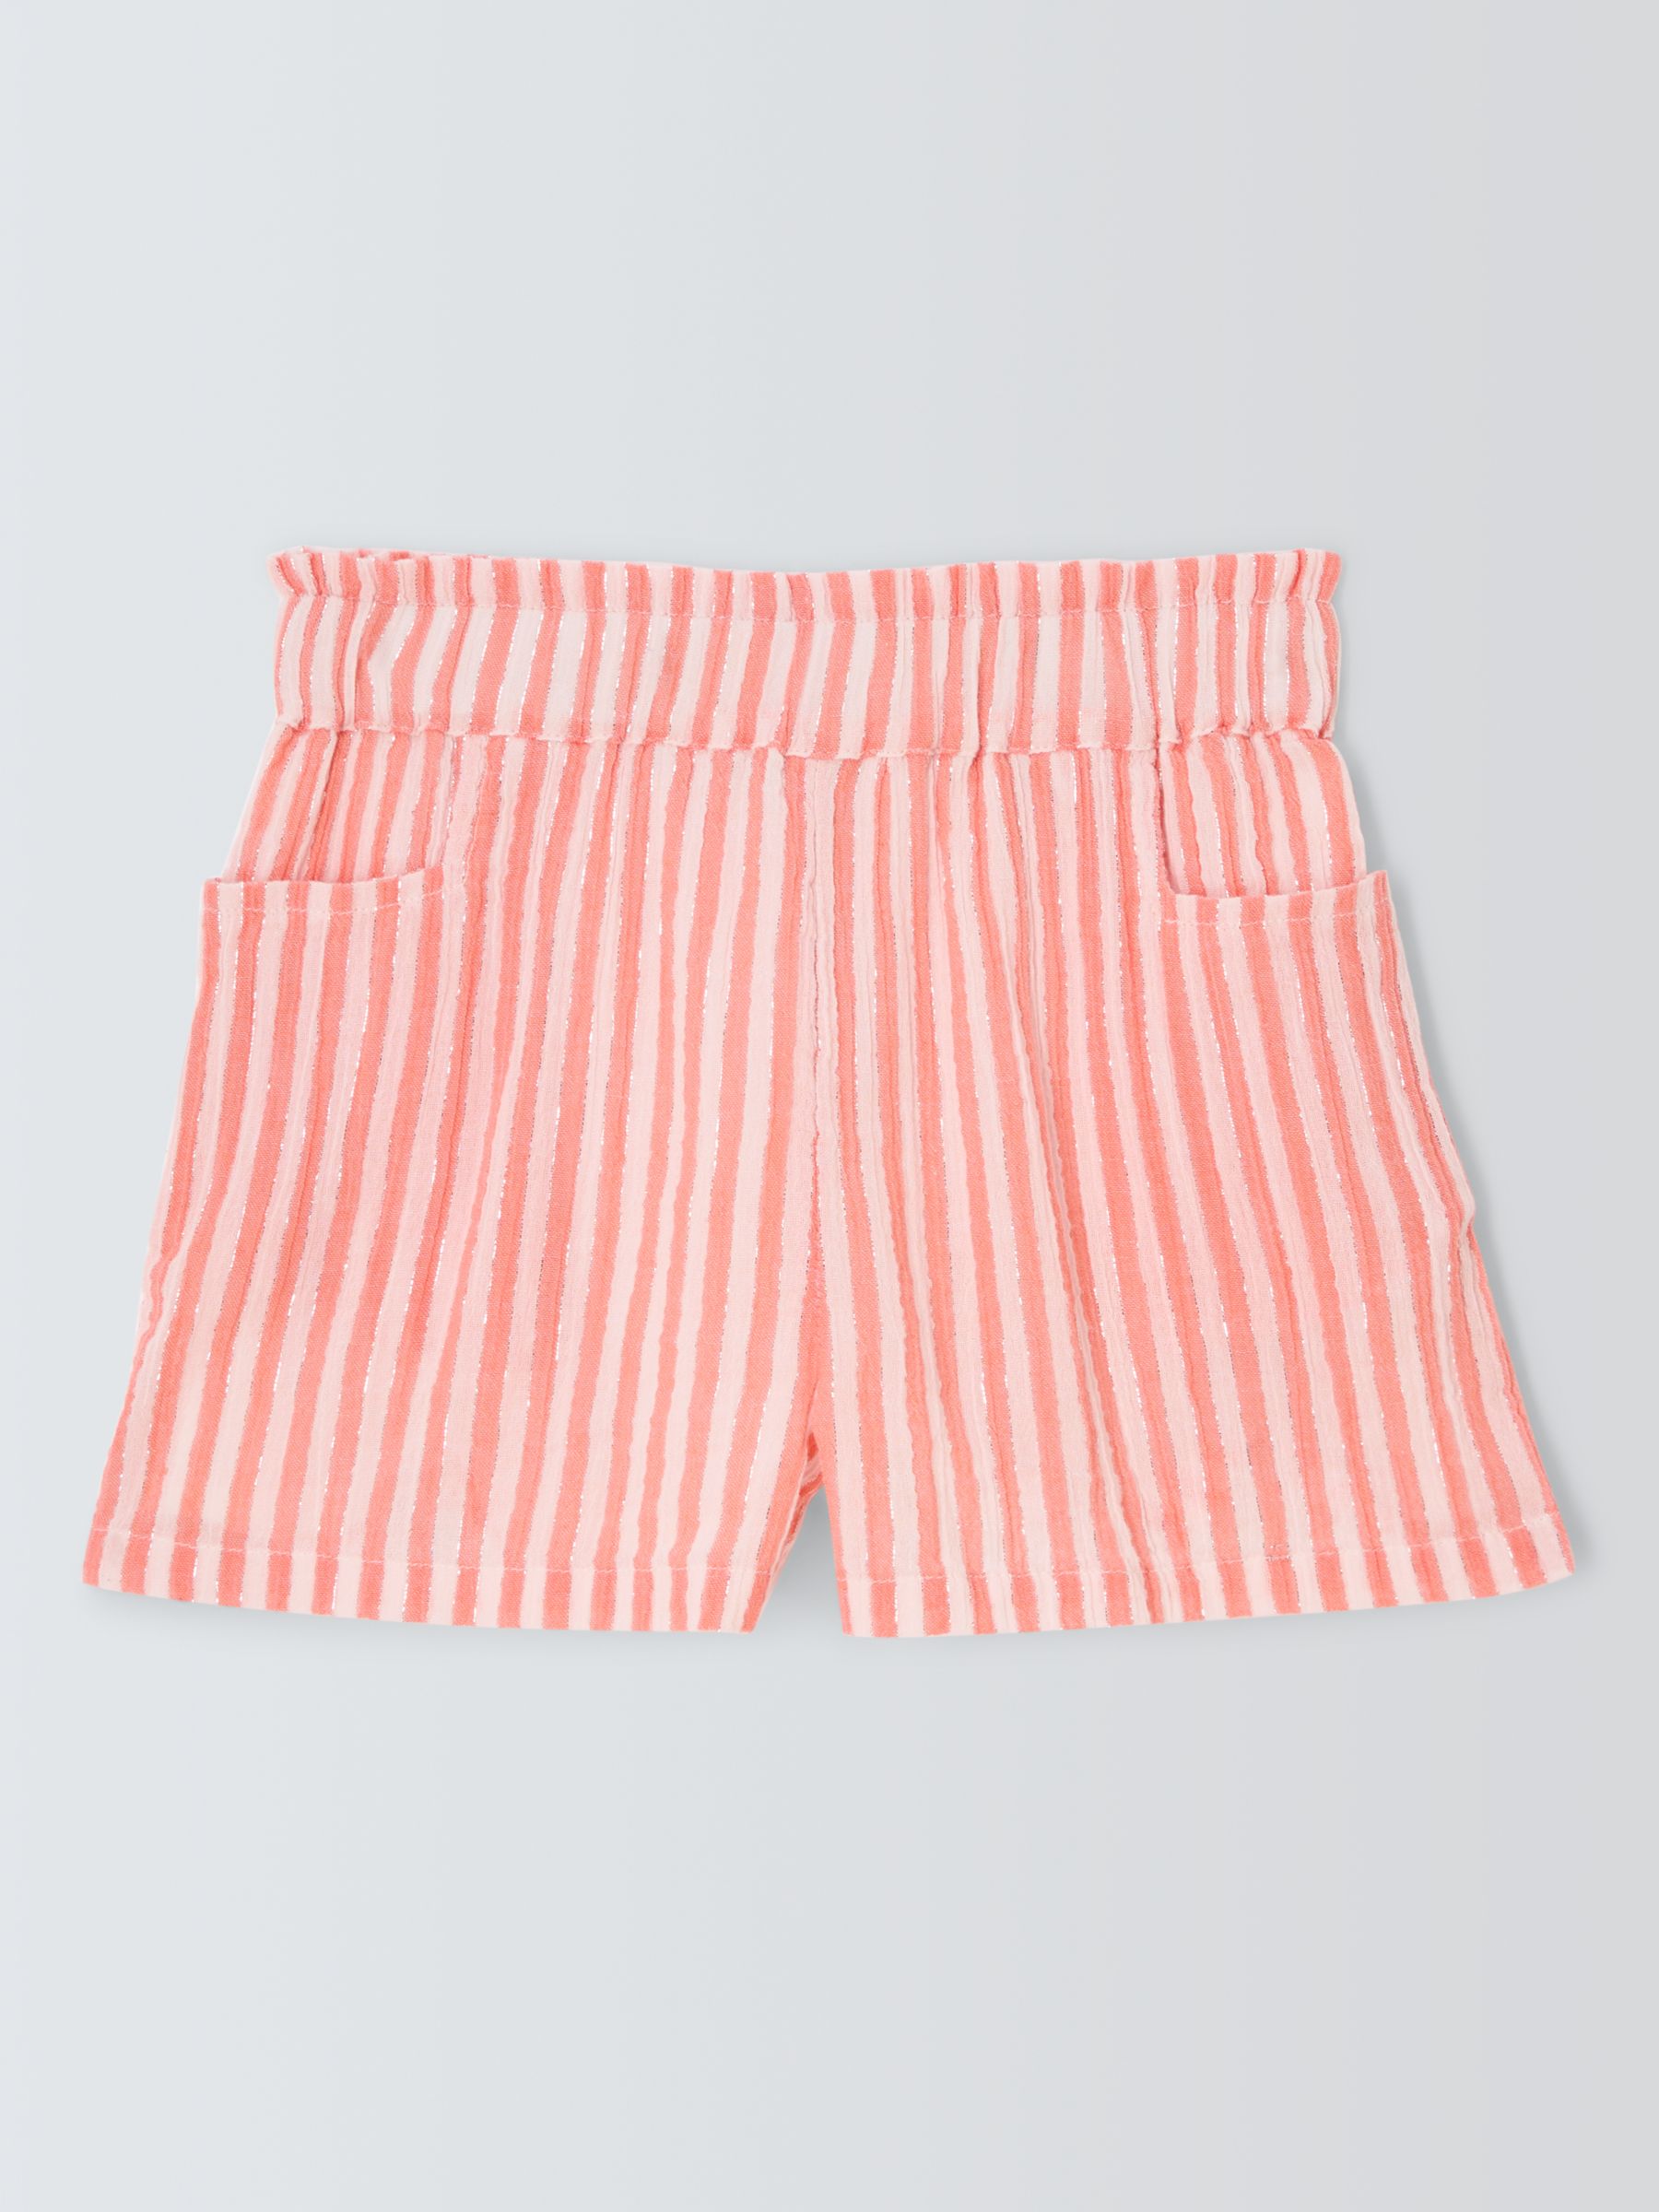 John Lewis Kids' Lurex Stripe Woven Shorts, White/Peach, 7 years